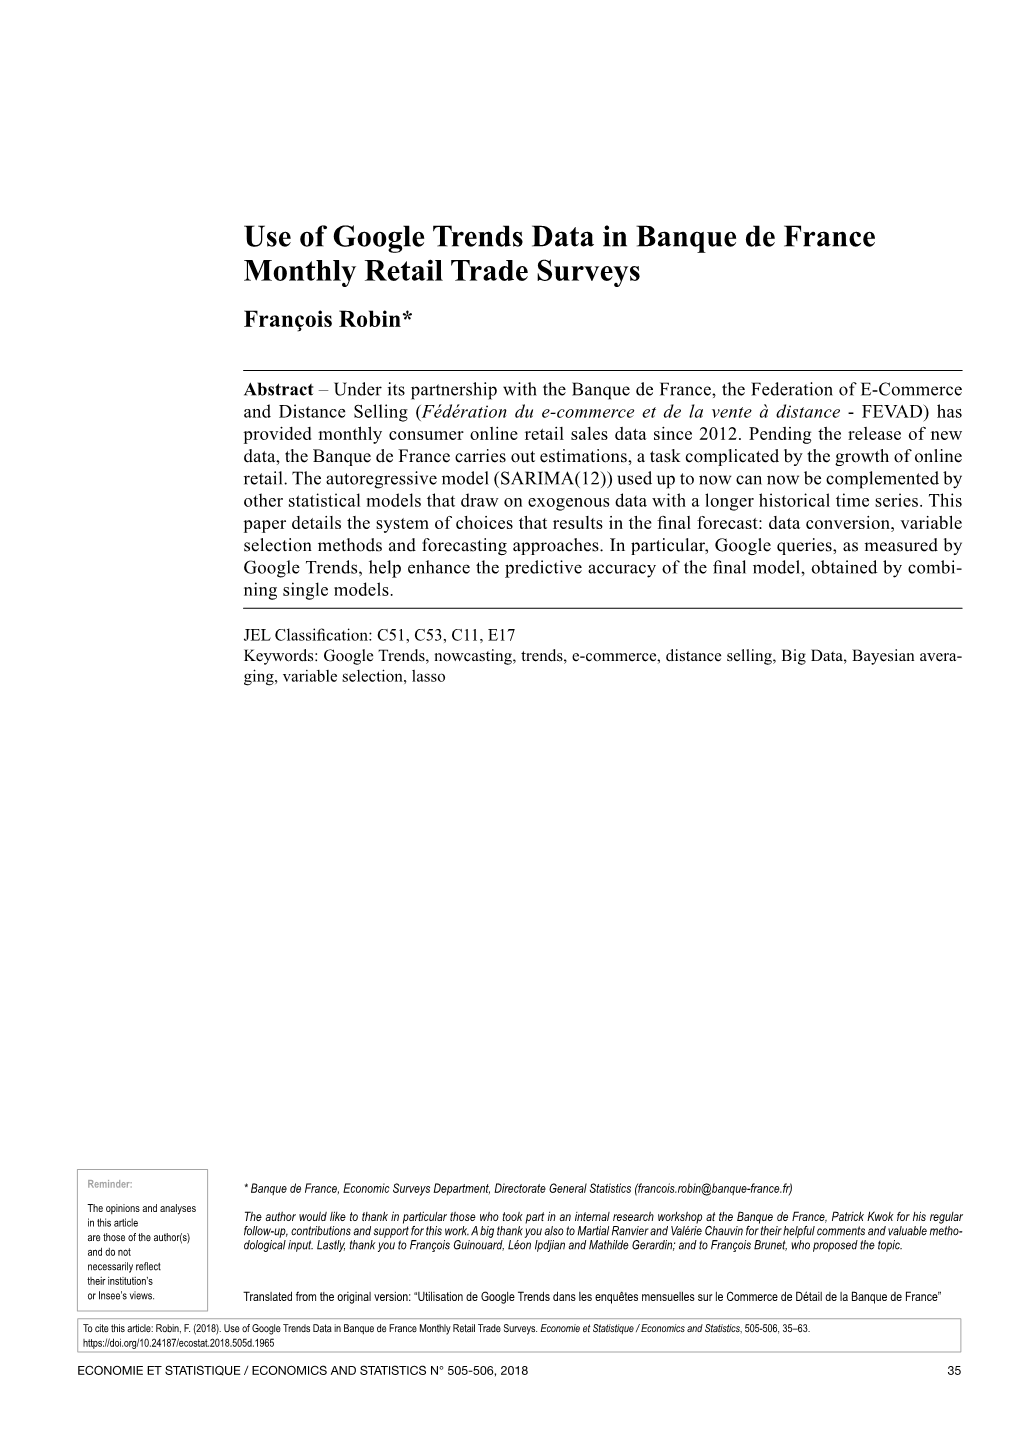 Use of Google Trends Data in Banque De France Monthly Retail Trade Surveys François Robin*